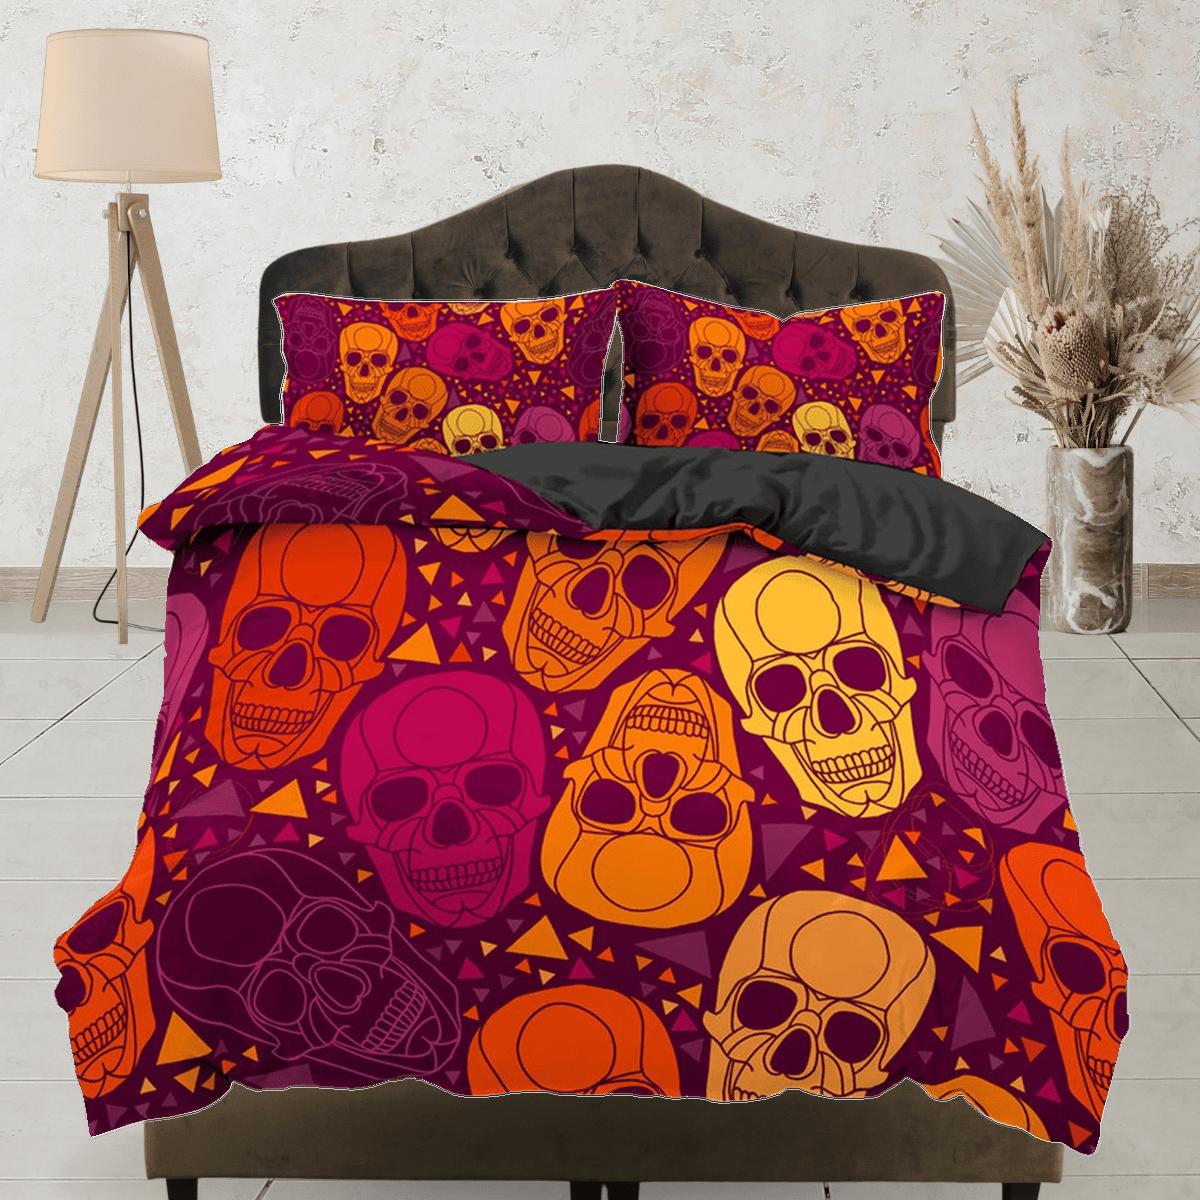 daintyduvet Colorful Skulls Duvet Cover Set Bedspread, Dorm Bedding with Pillowcase